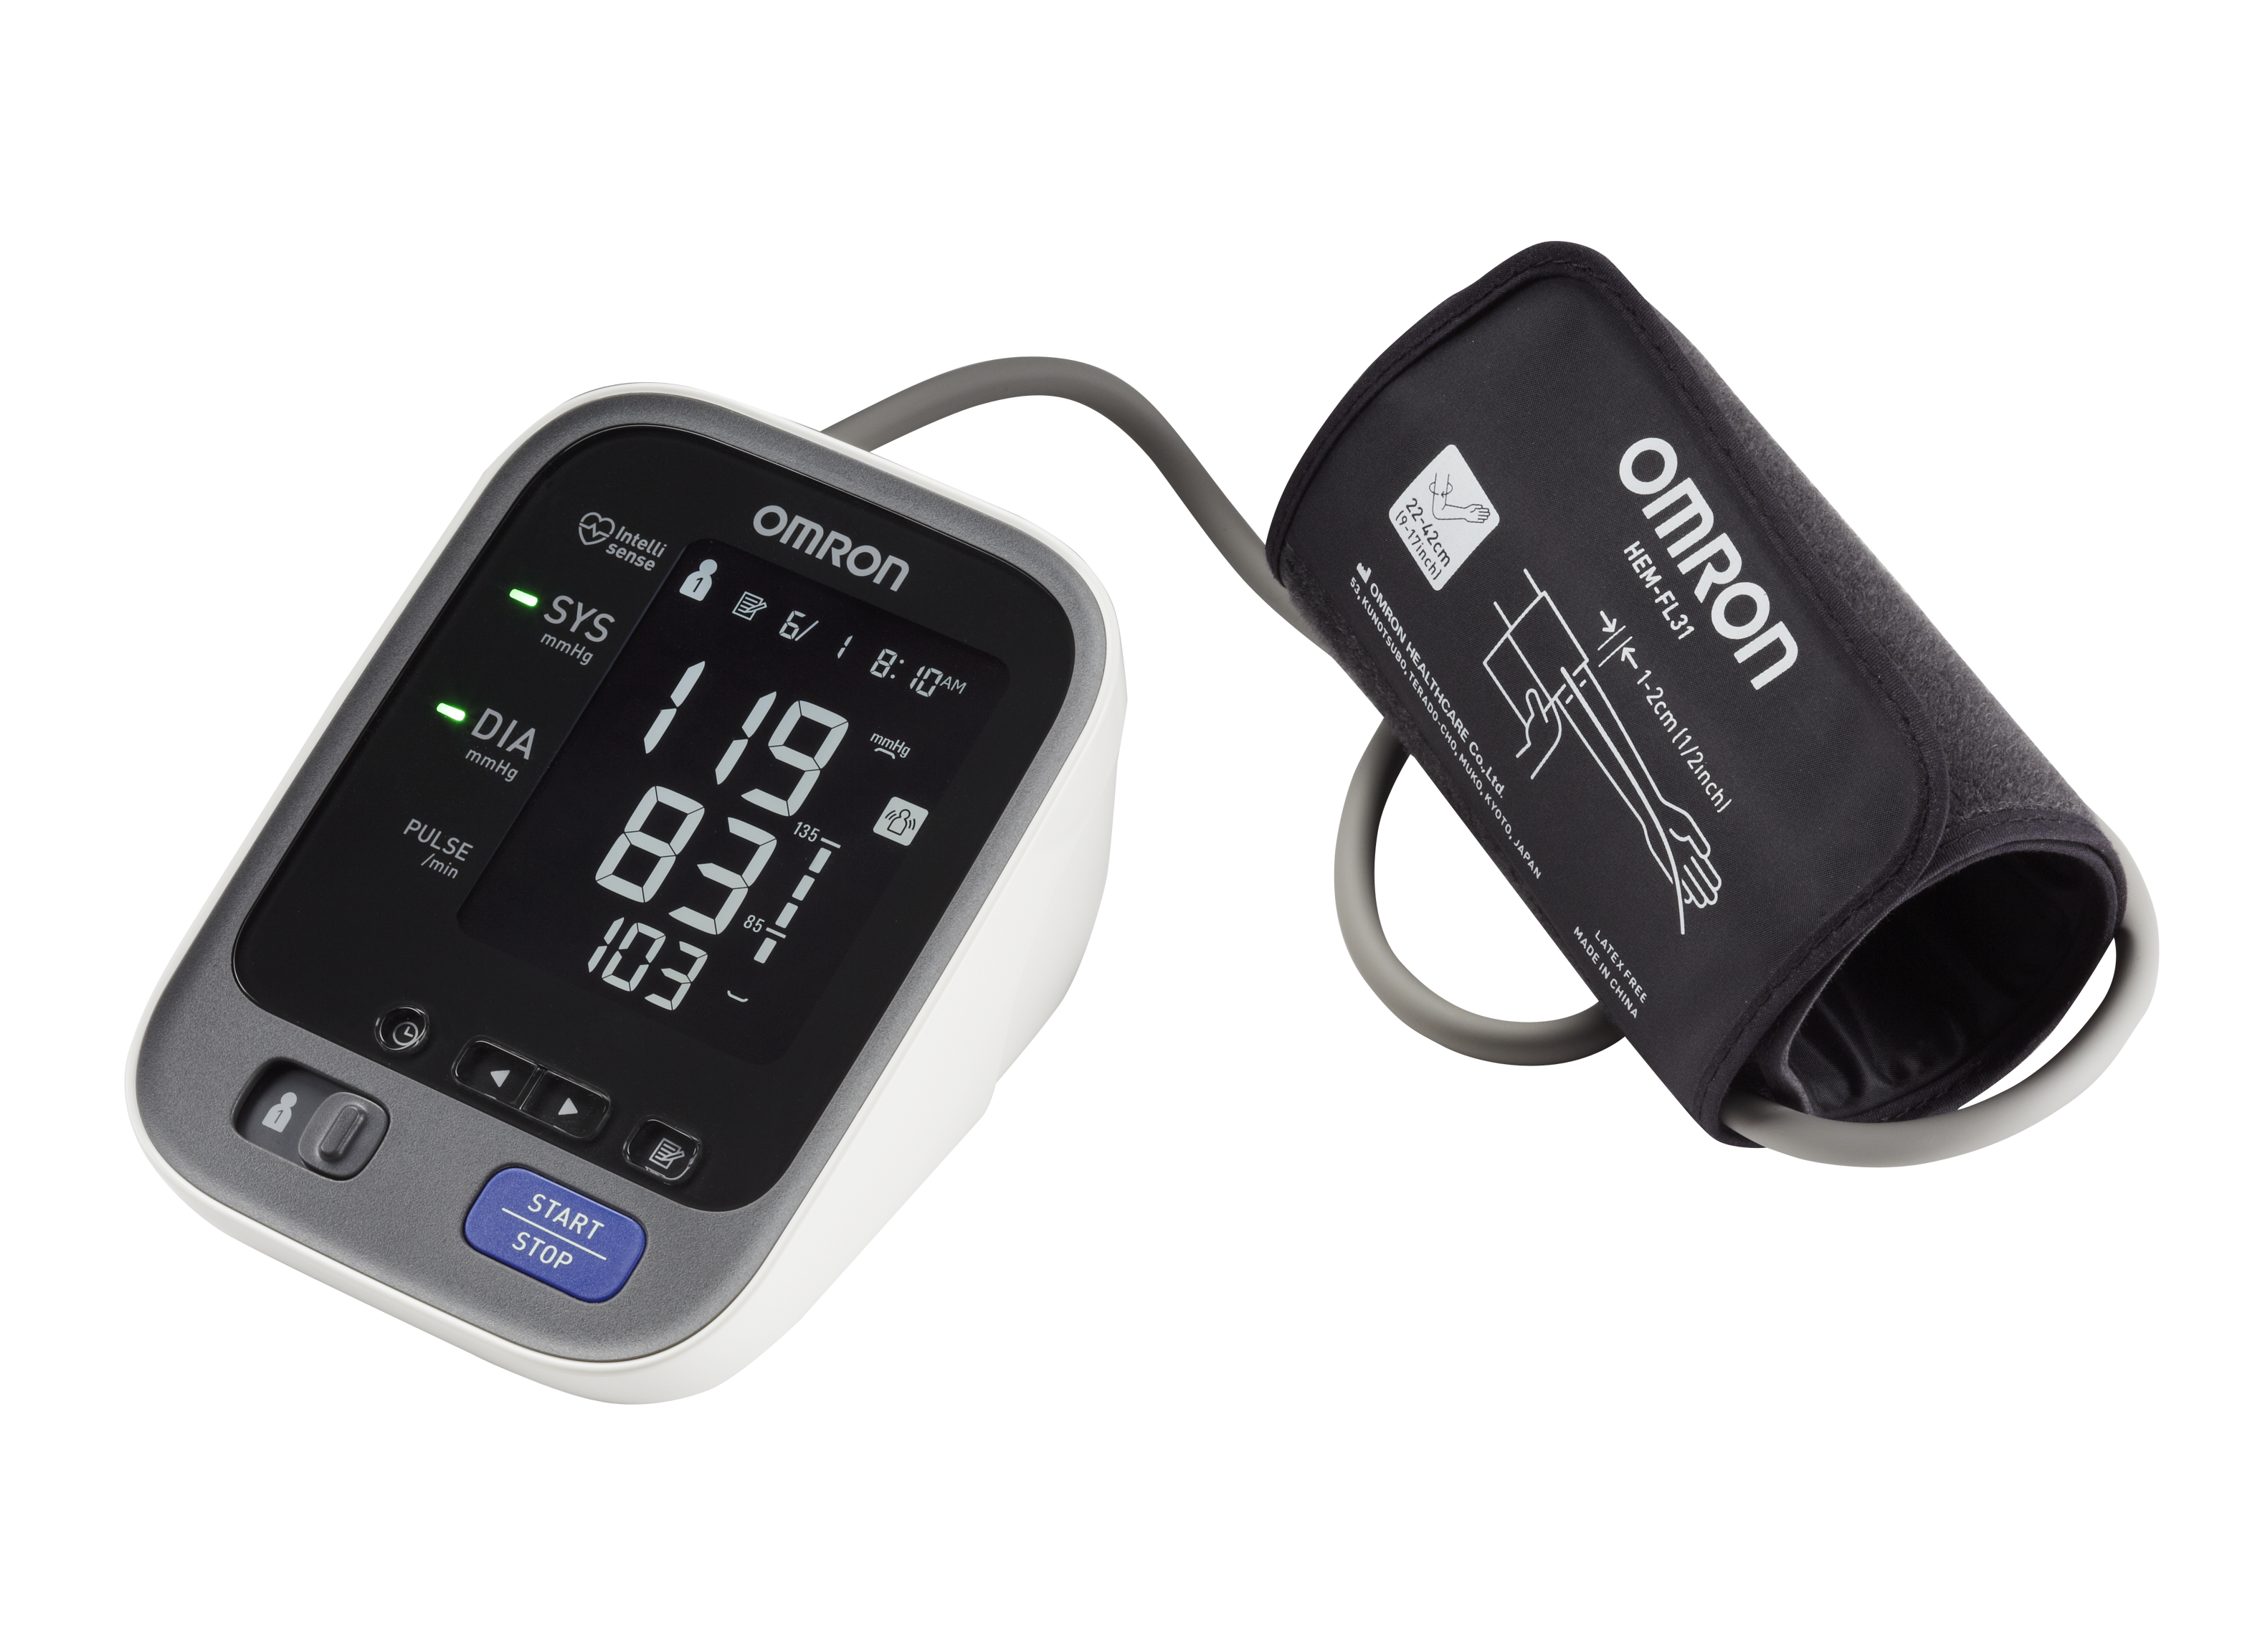 Omron 10 Series Blood Pressure Monitor - 1 Monitor 